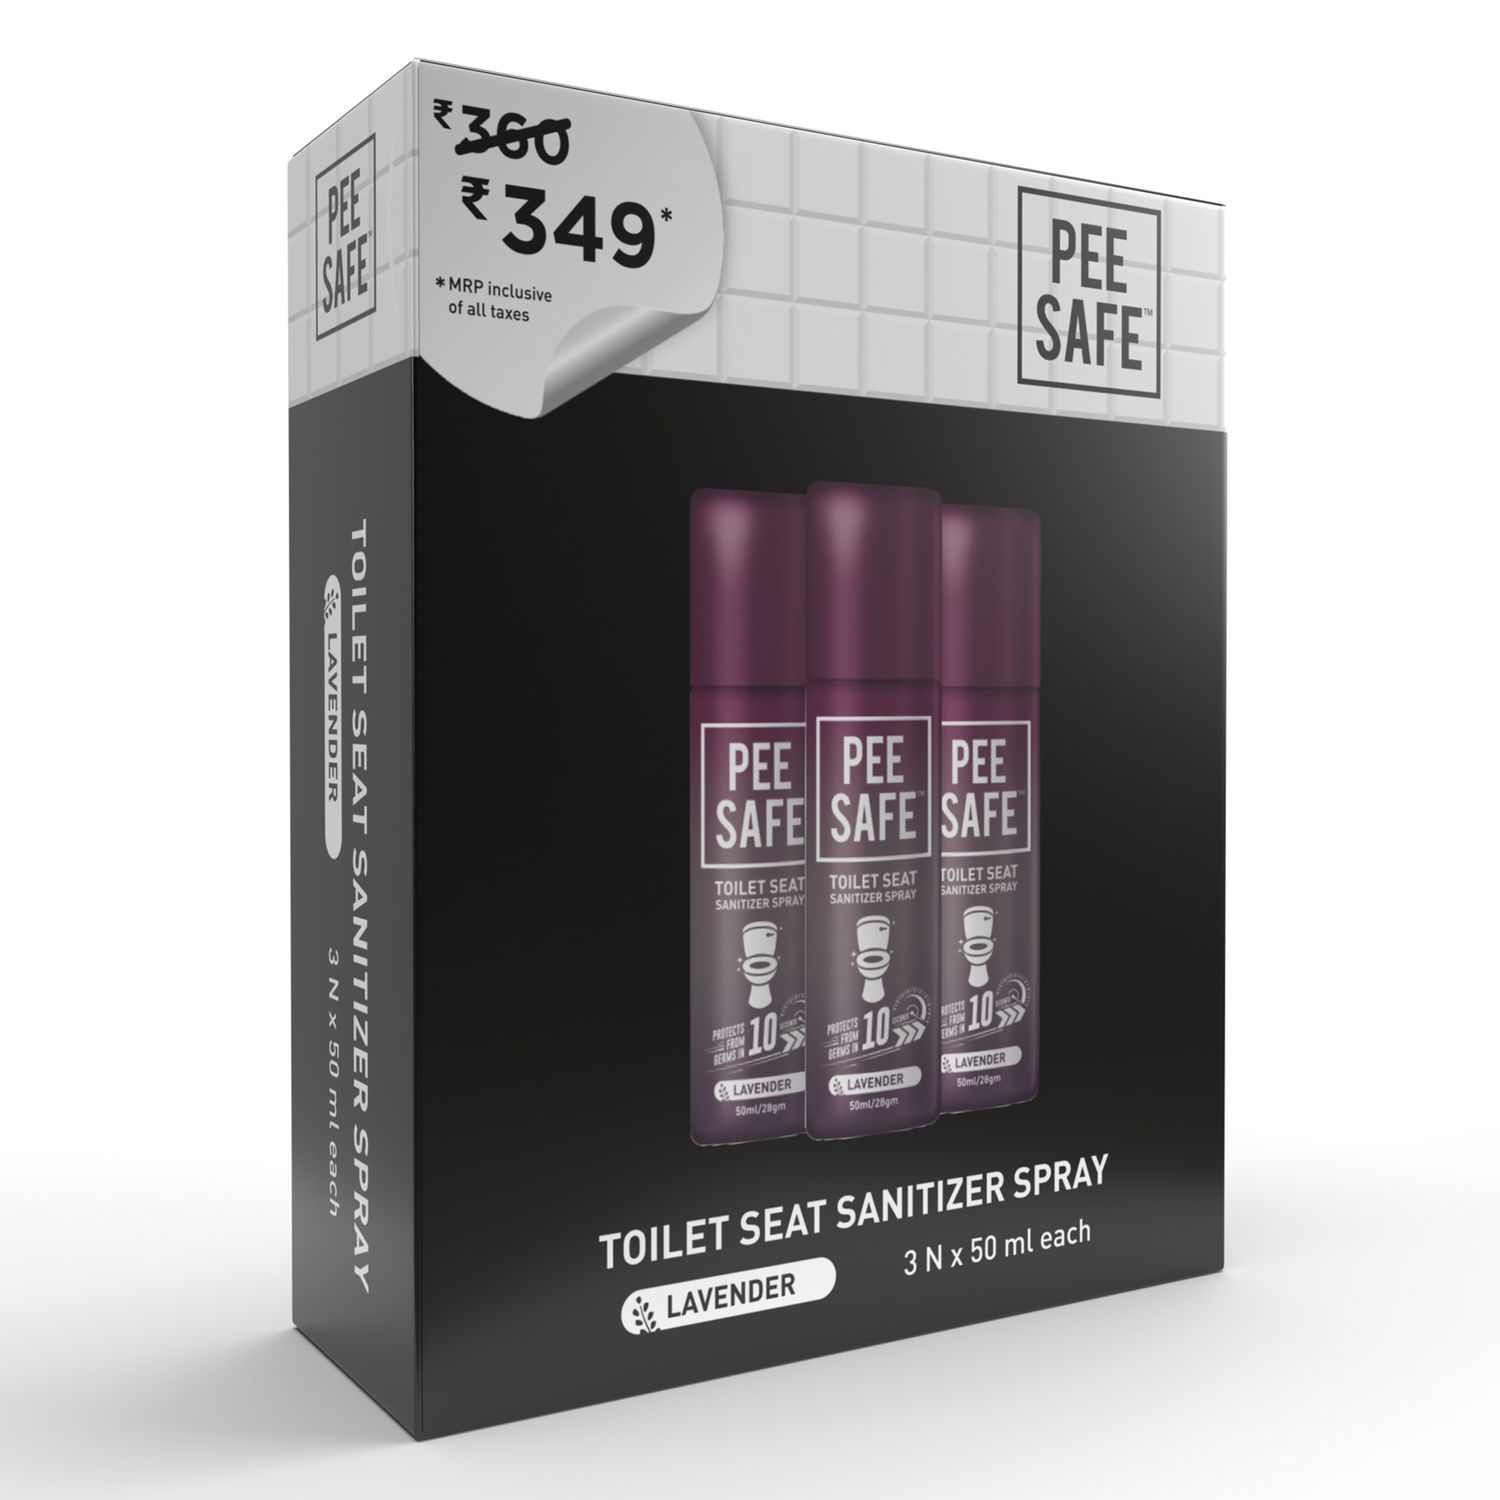 Buy Pee Safe Toilet Seat Sanitizer Spray Lavender (50 ml) (Pack of 3) - Purplle